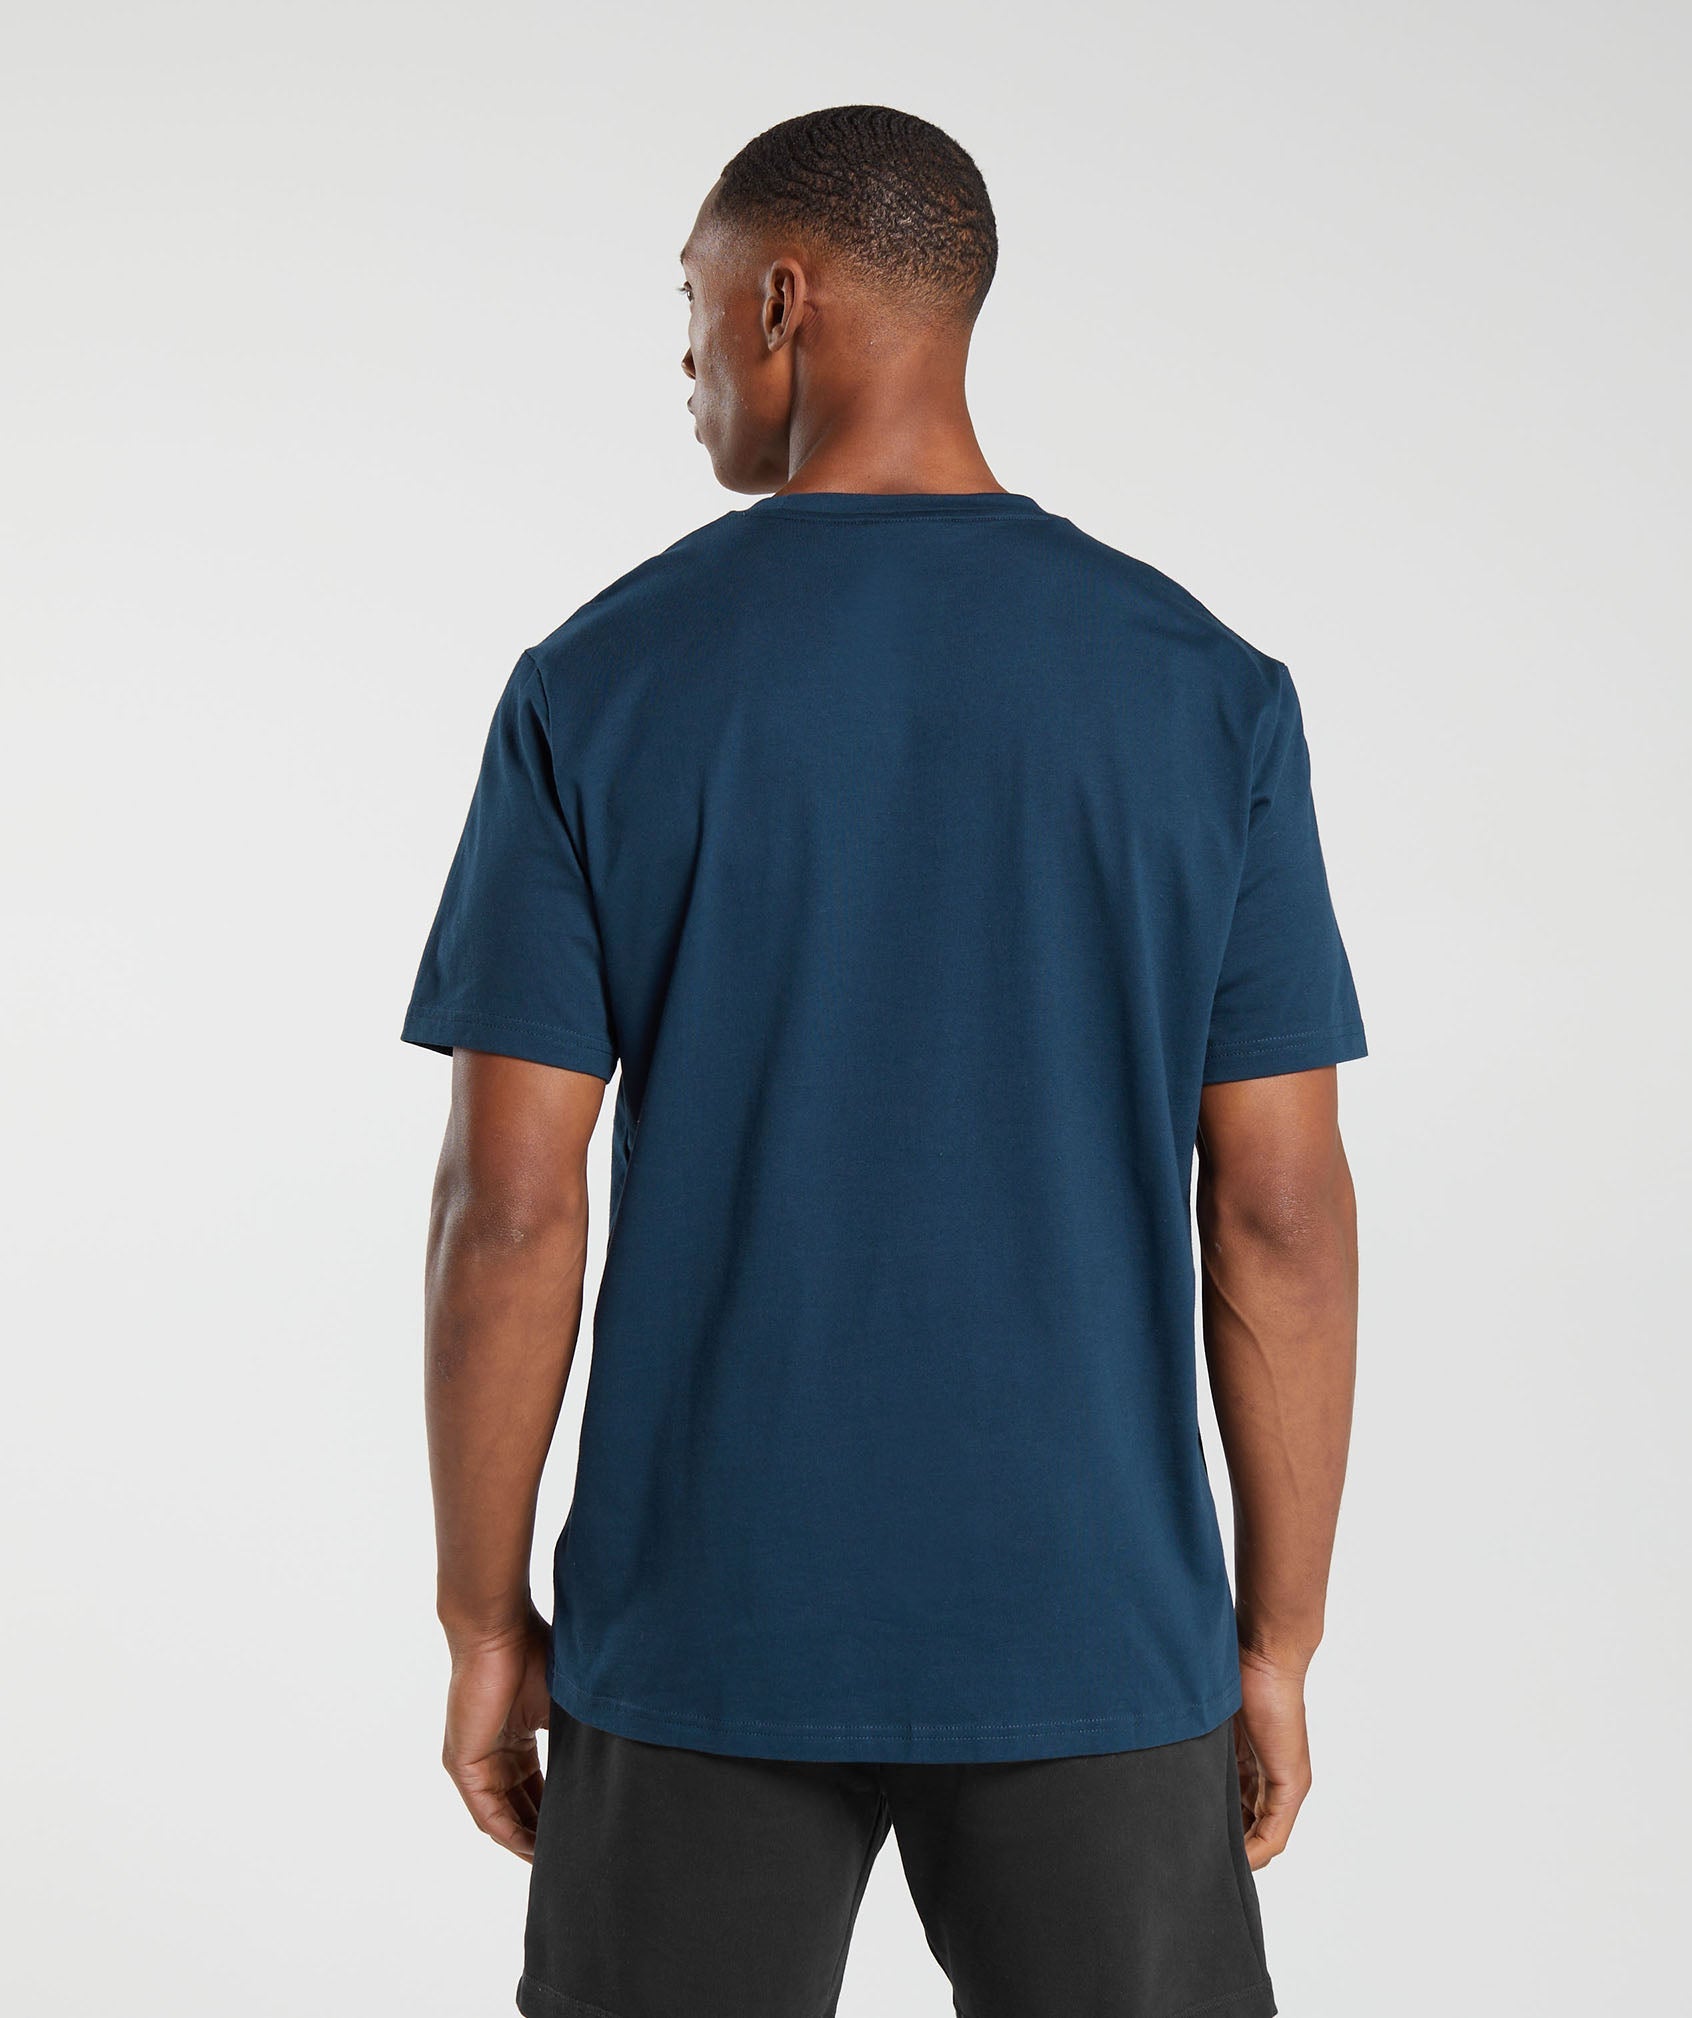 Crest | Navy - Gymshark T-Shirt Gymshark